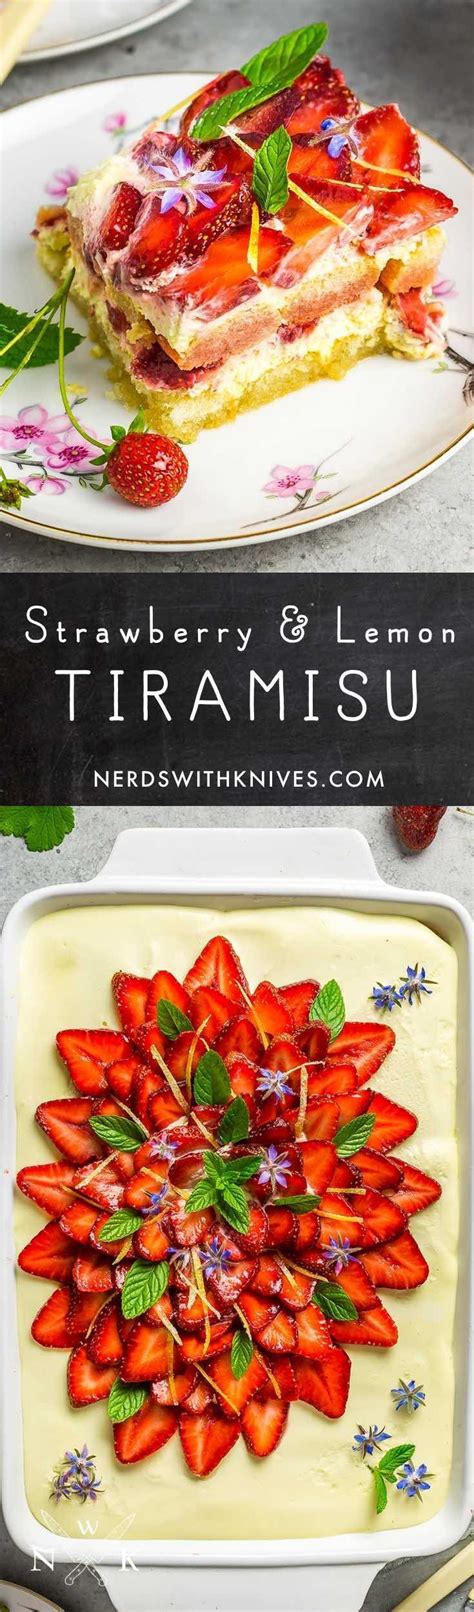 Ladyfinger lemon desserttaste of home. Strawberry Lemon Tiramisu | Recipe | Recipes, Lemon ...